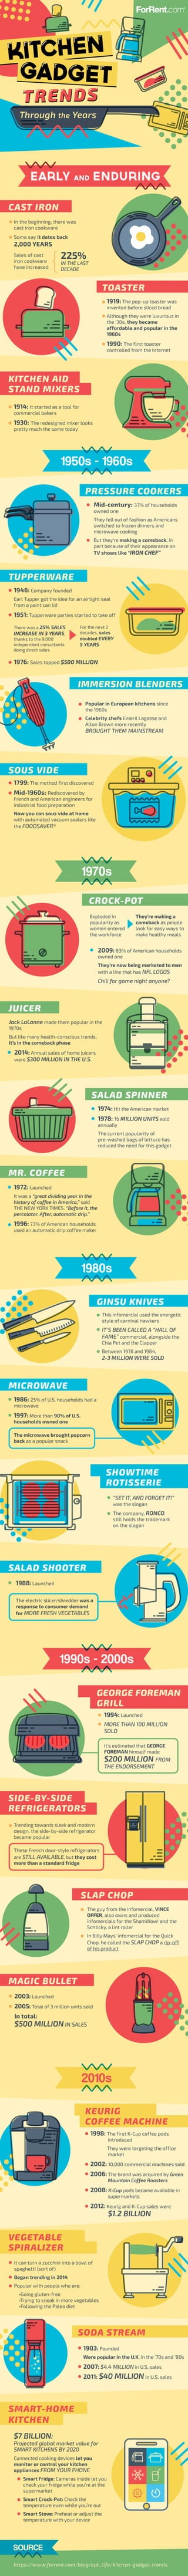 Kitchen Gadget Trends Through the Years